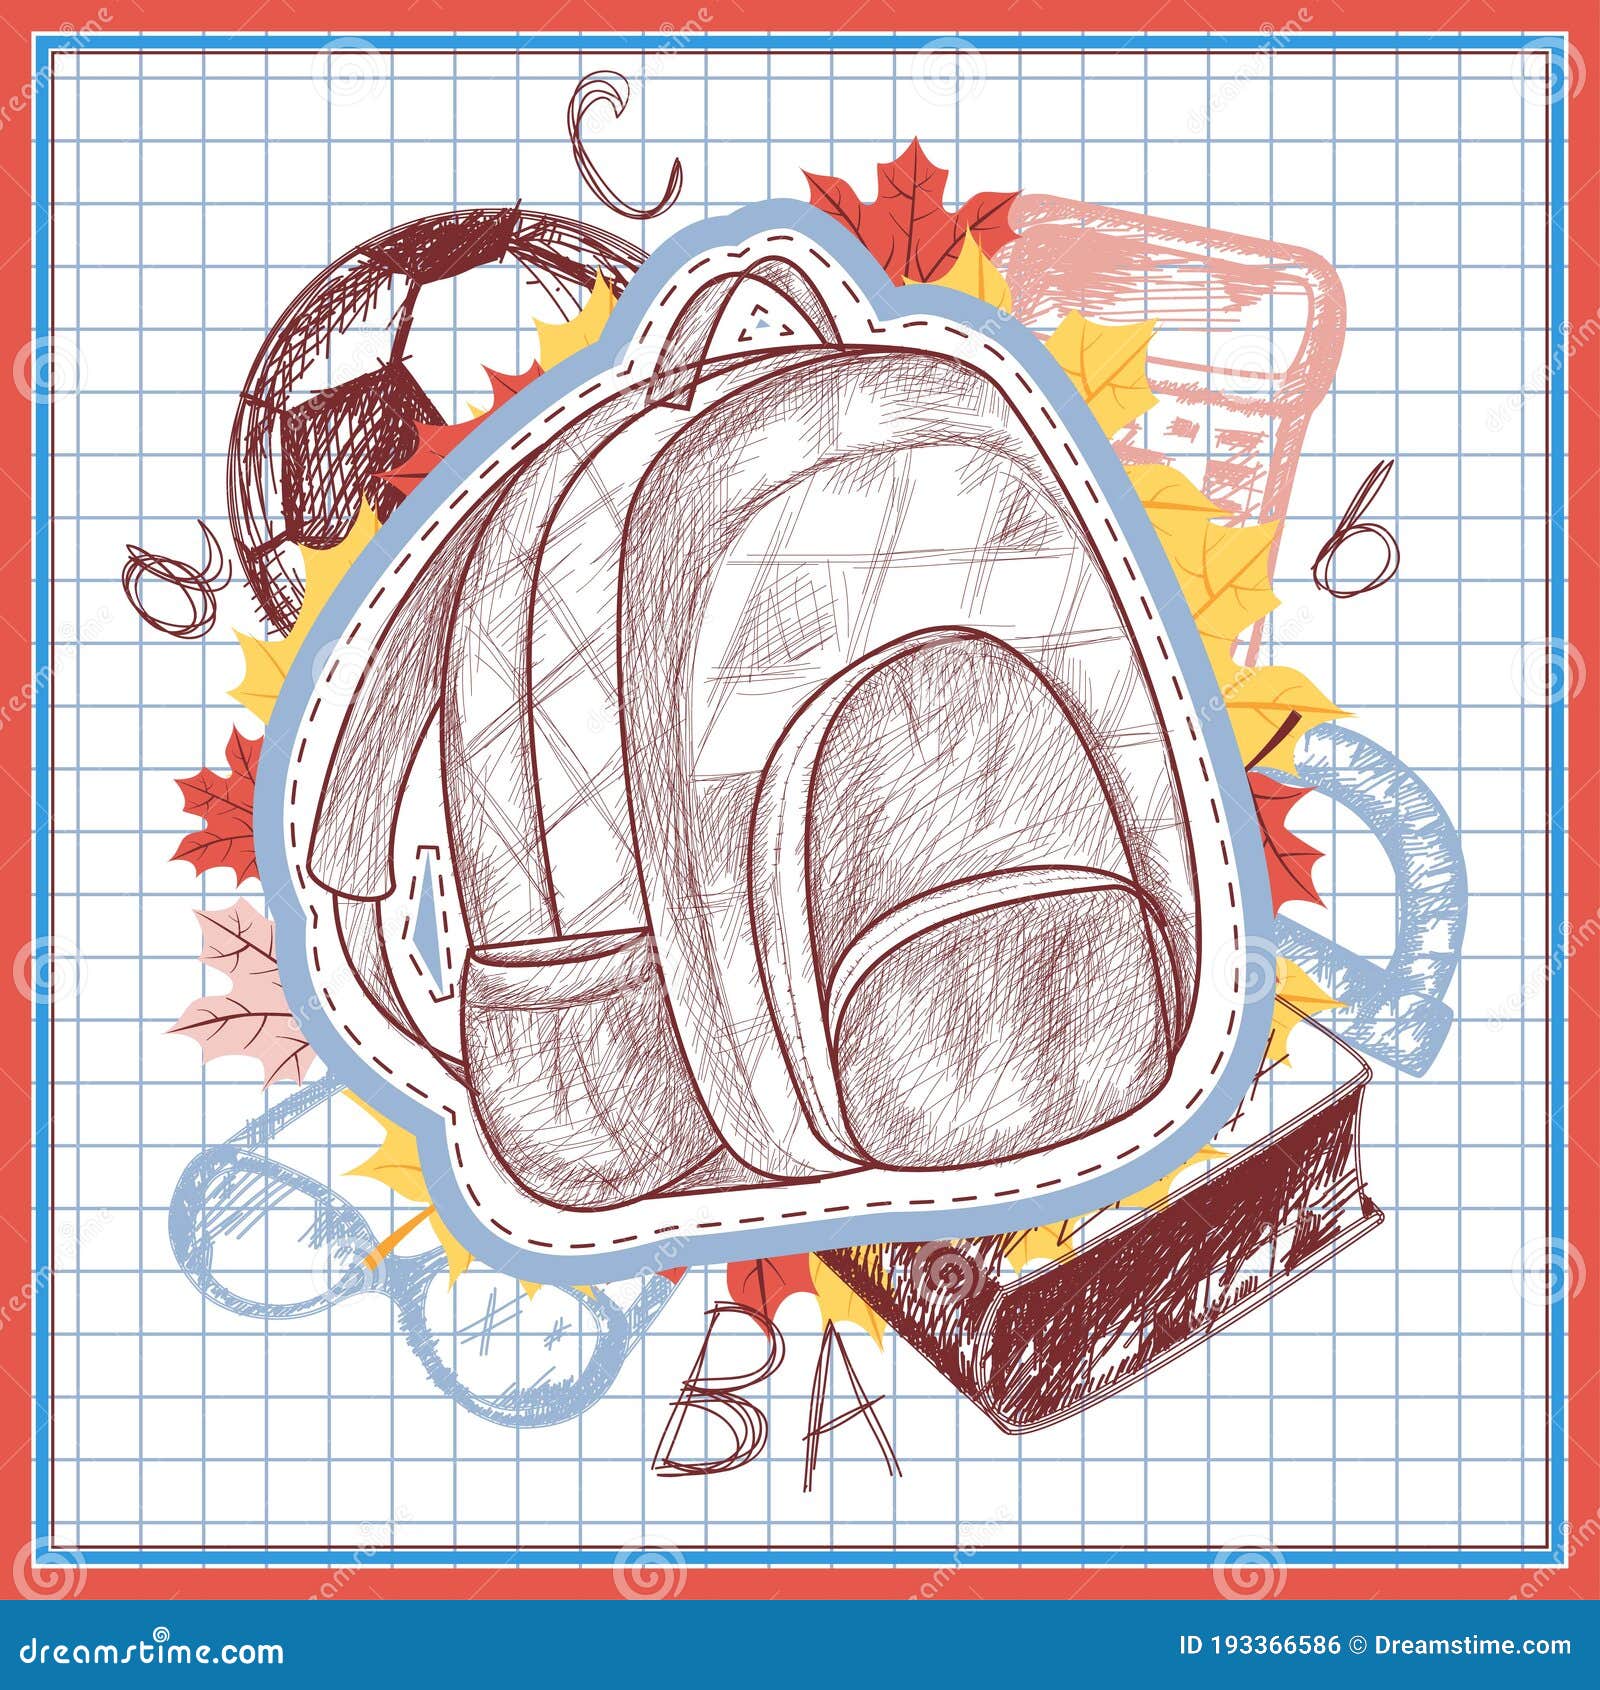 School bag. Hand drawn sketch of school bag. | CanStock